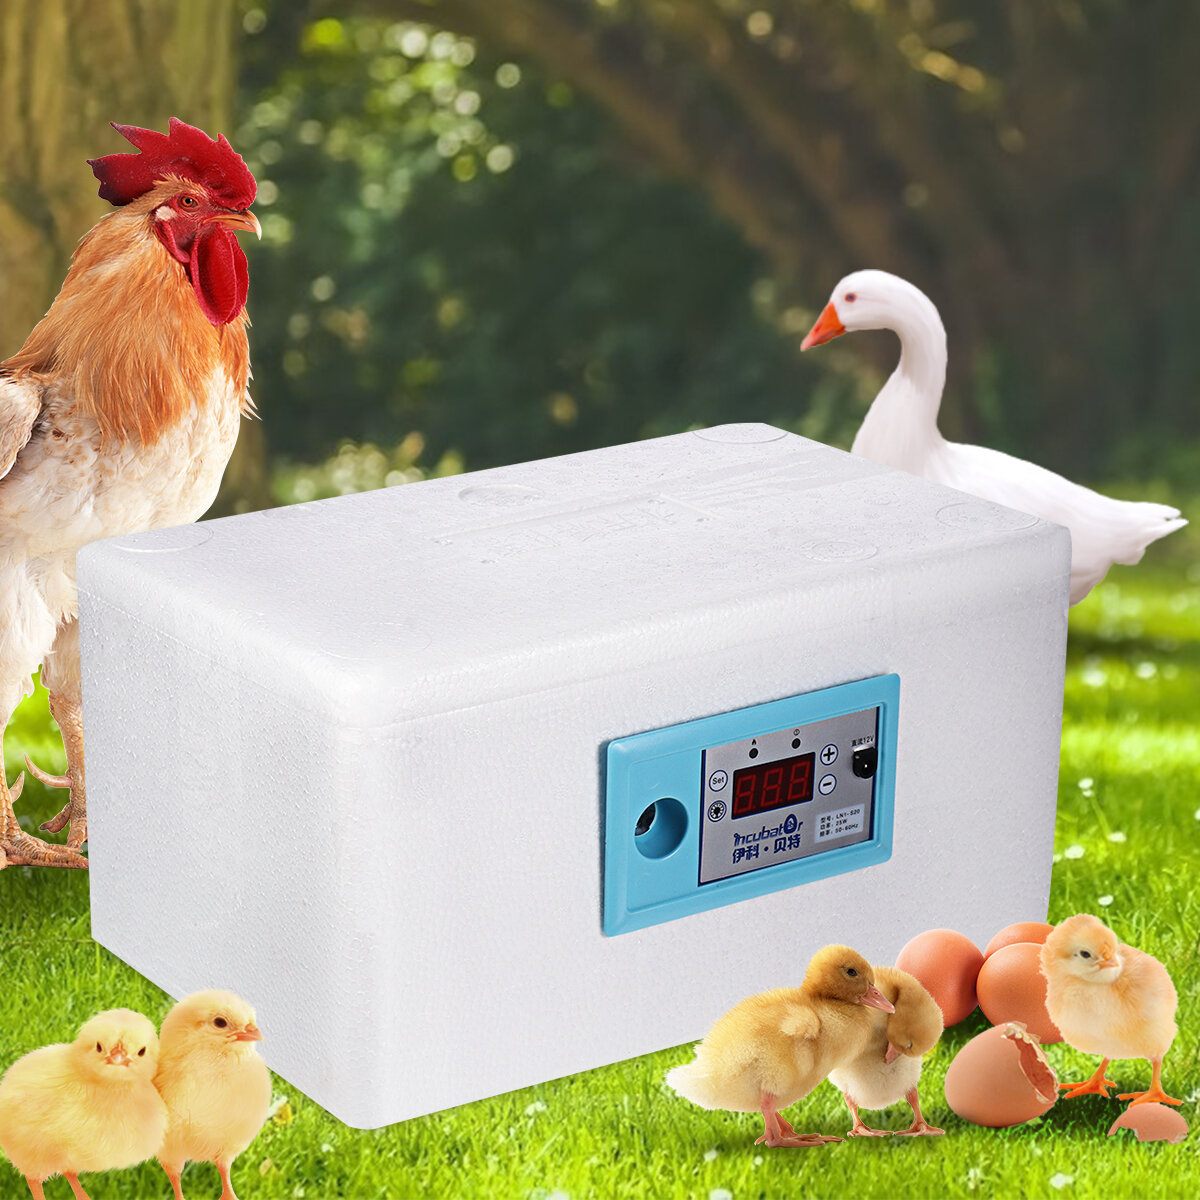 

Digital Temperature Control Egg Incubator Poultry Incubator Brooder Hatchery Egg Hatcher for Chicken Duck Bird Pigeon